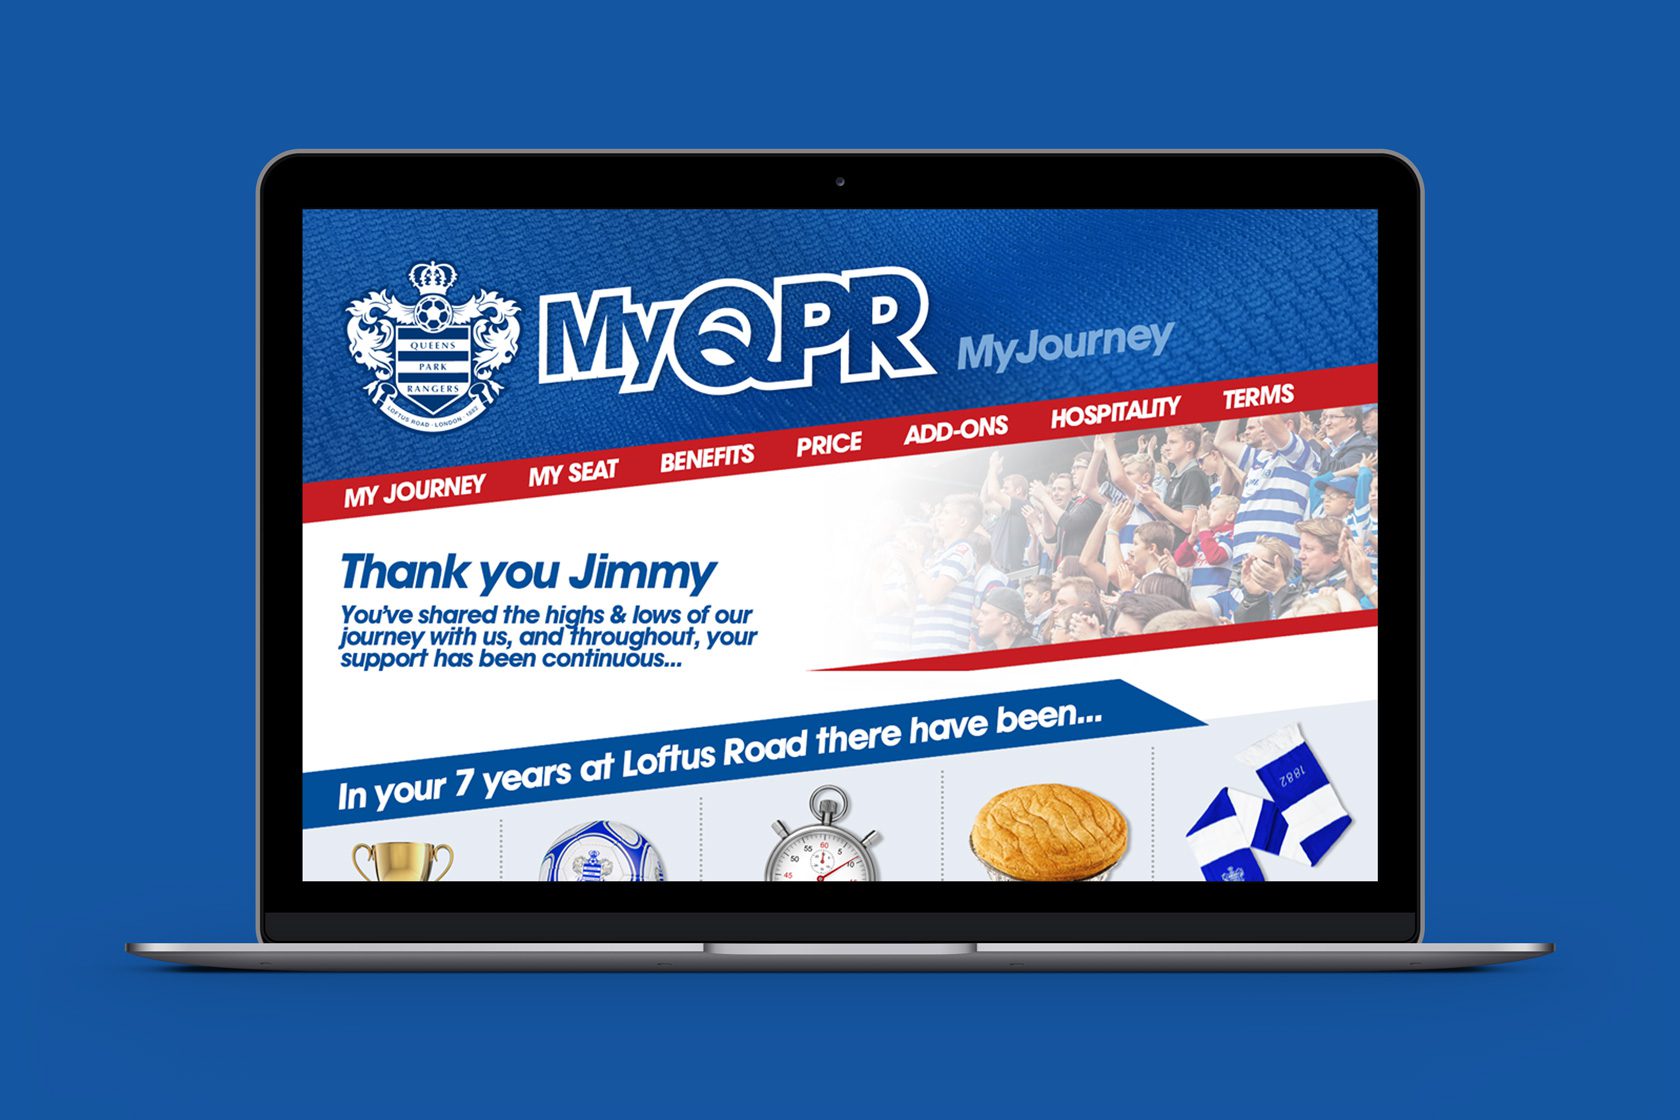 MyQPR PURL homepage